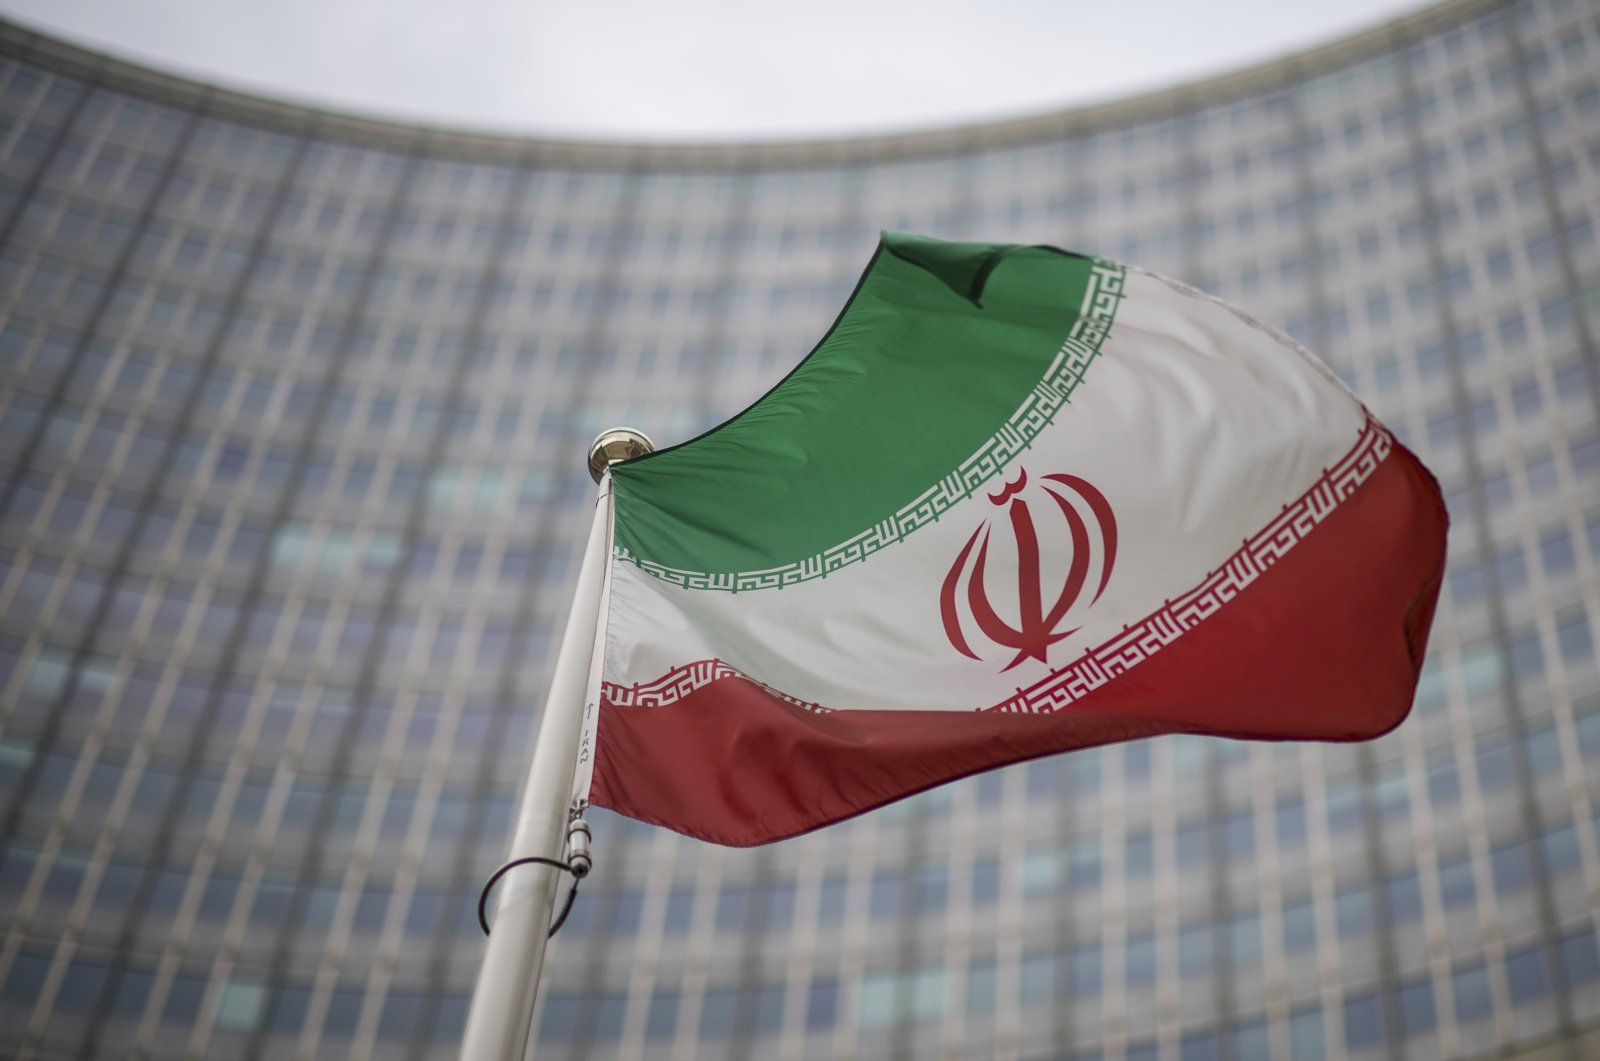 Iran antusias tentang pembicaraan nuklir, tidak seperti Barat: Para ahli